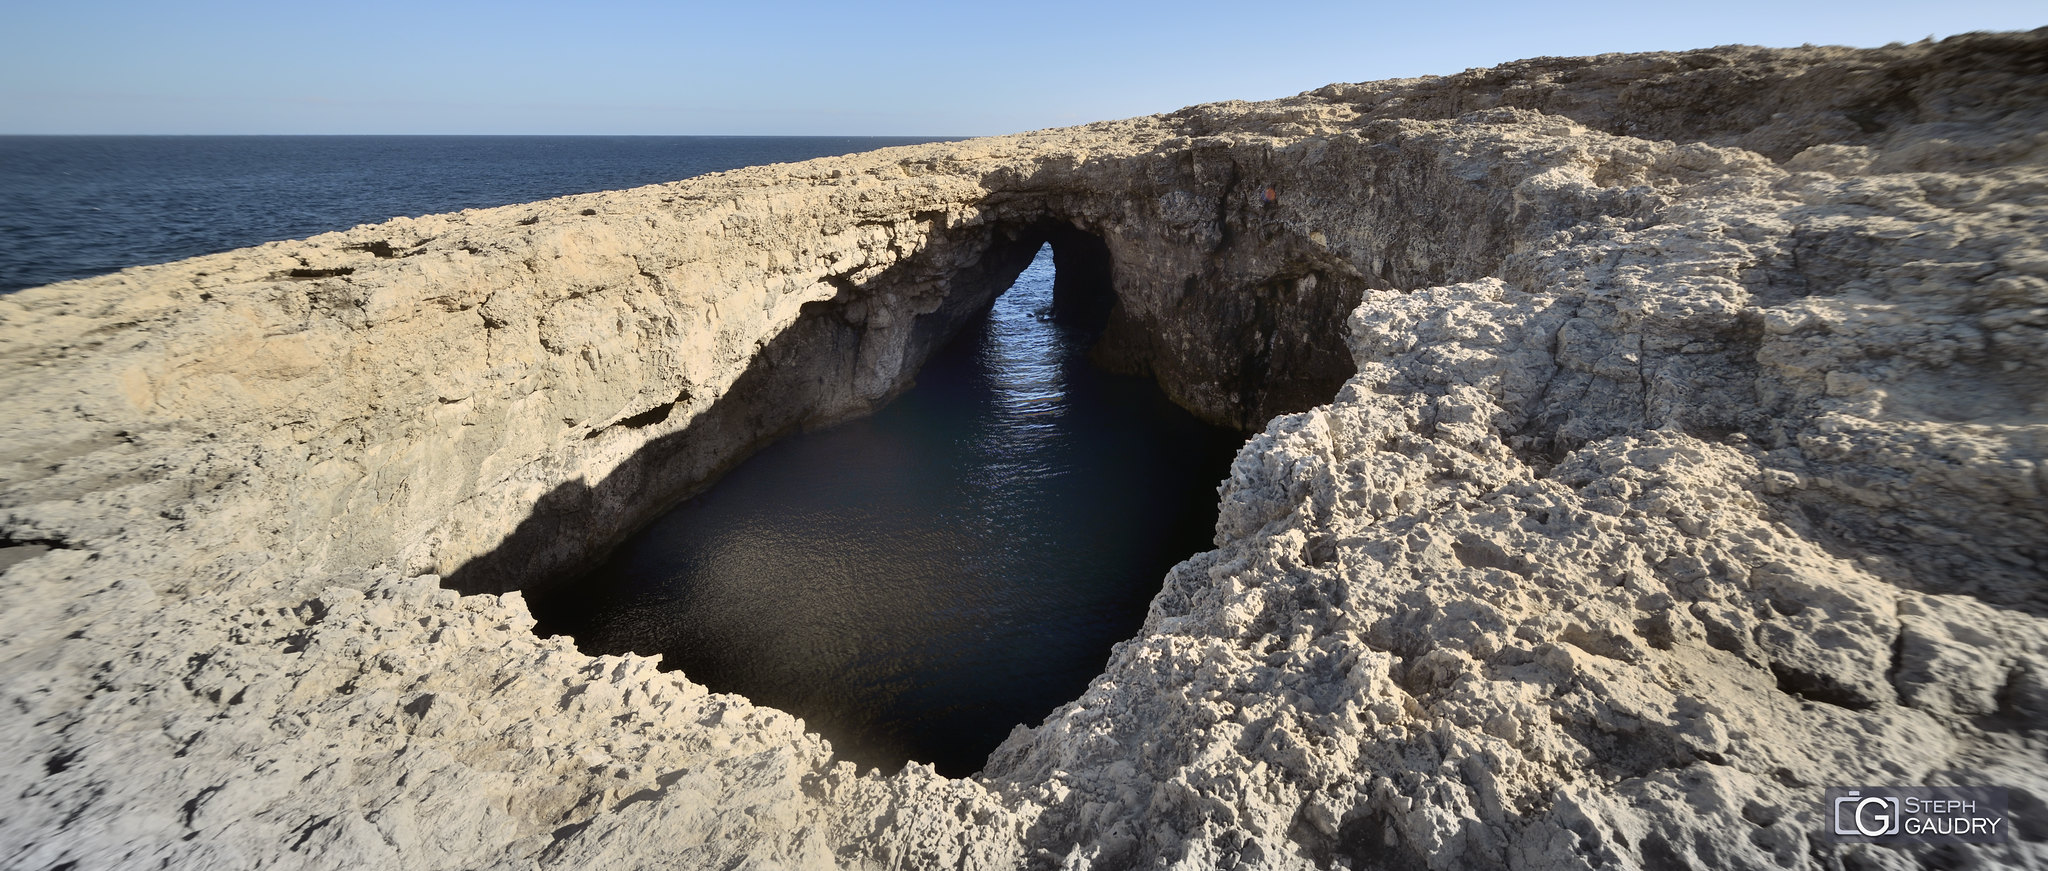 Coral Lagoon à Malte [Klik om de diavoorstelling te starten]